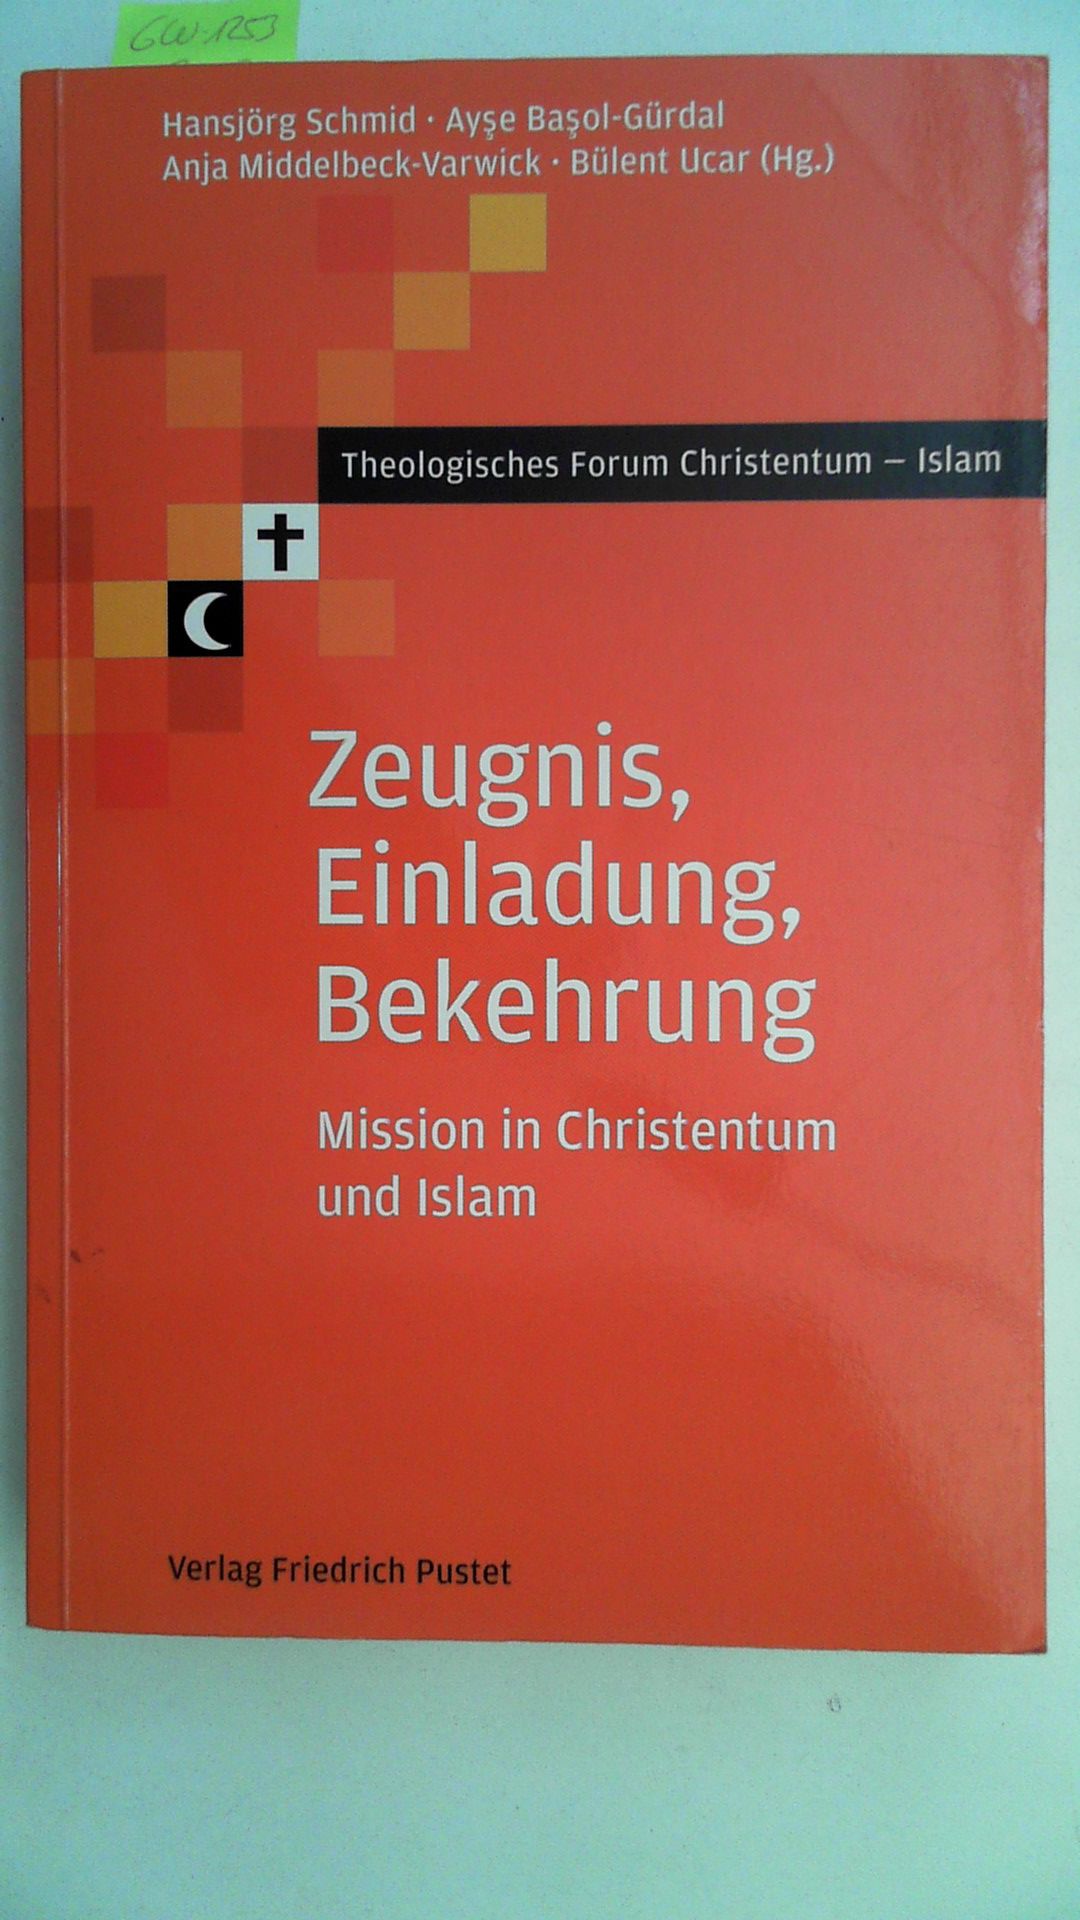 Zeugnis, Einladung, Bekehrung : Mission in Christentum und Islam. (Hg.) / Theologisches Forum Christentum - Islam - Schmid, Hansjörg, Ayse (Hrsg.) Basol-Gürdal und Anja (Hrsg.) Ucar Bülent (Hrsg.) Middelbeck-Varwick